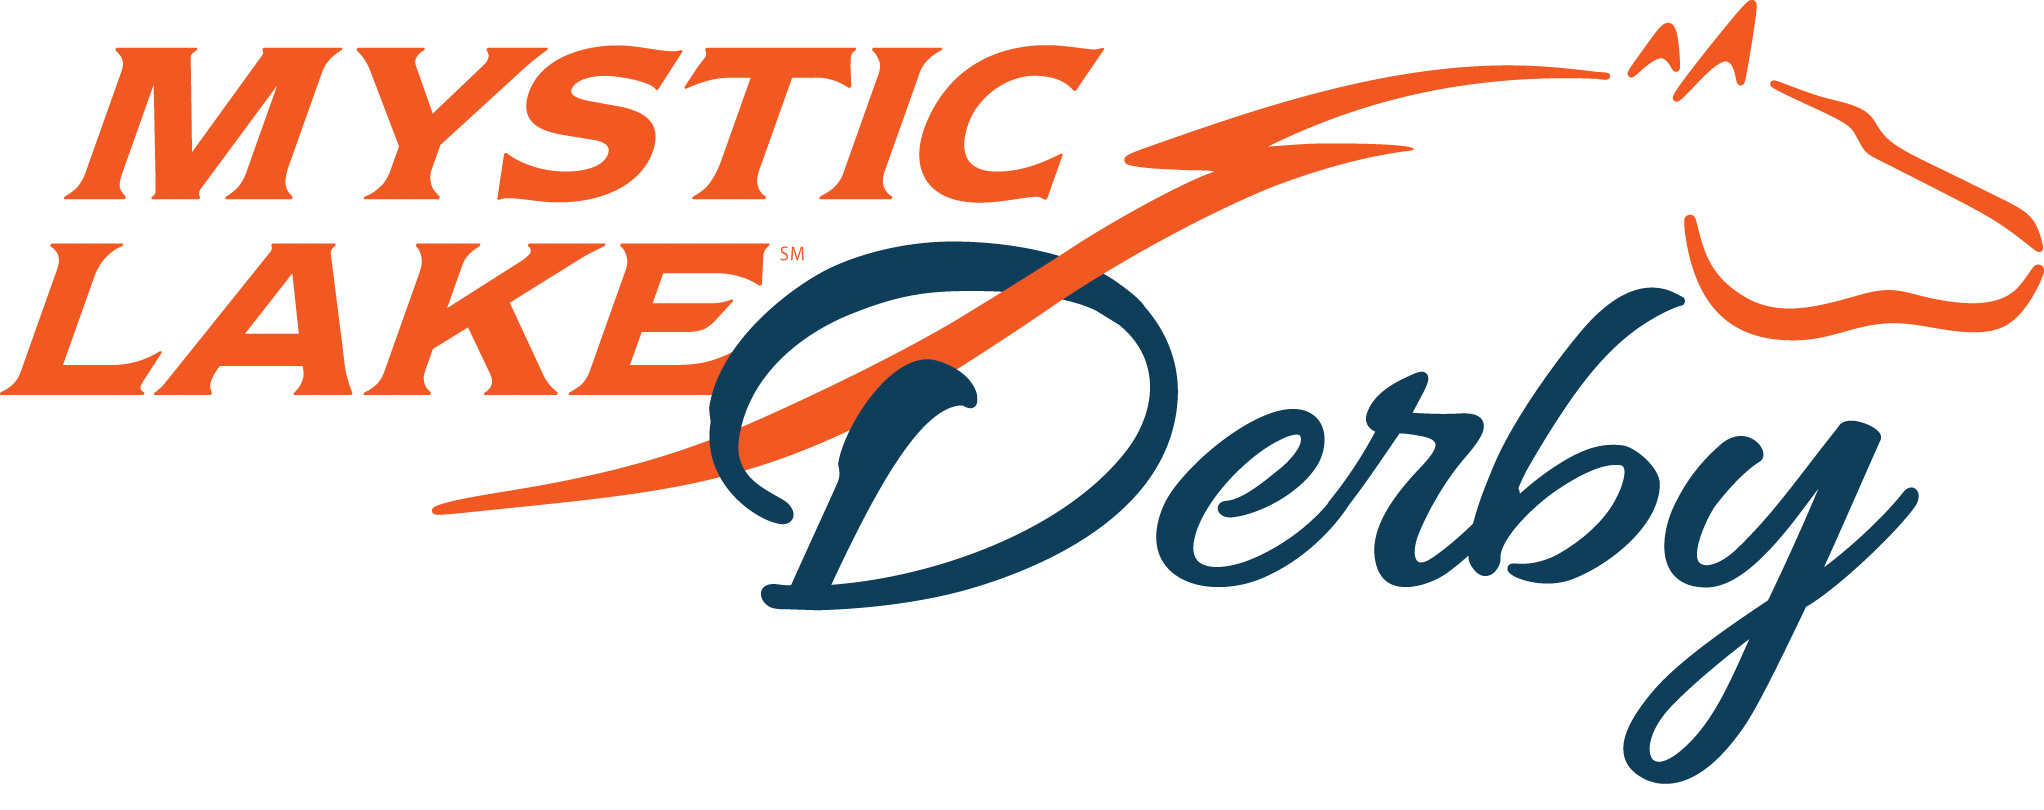 Mystic Lake Derby logo